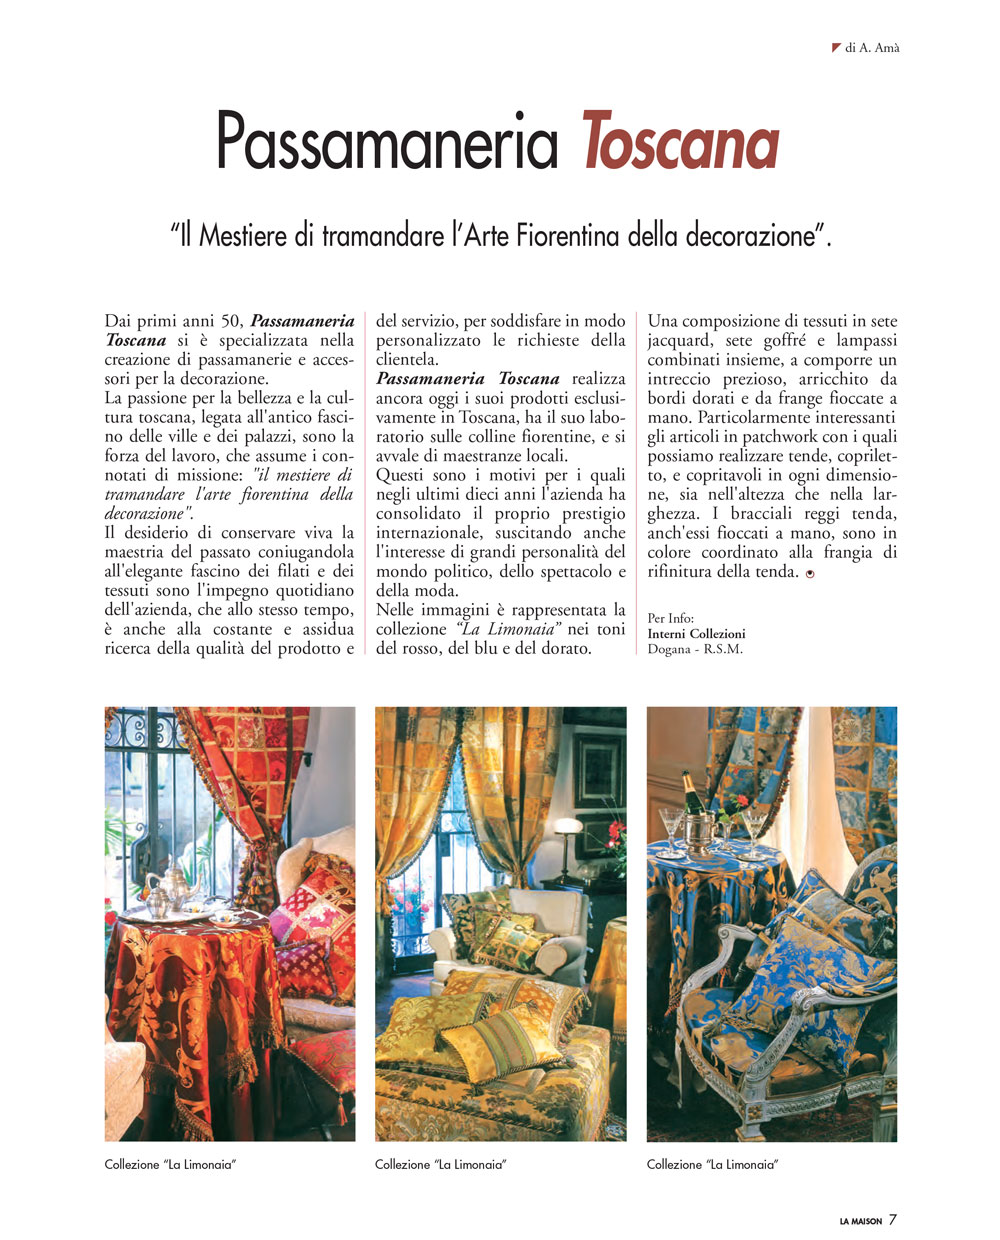 Passamaneria Toscana - Interni Collezioni